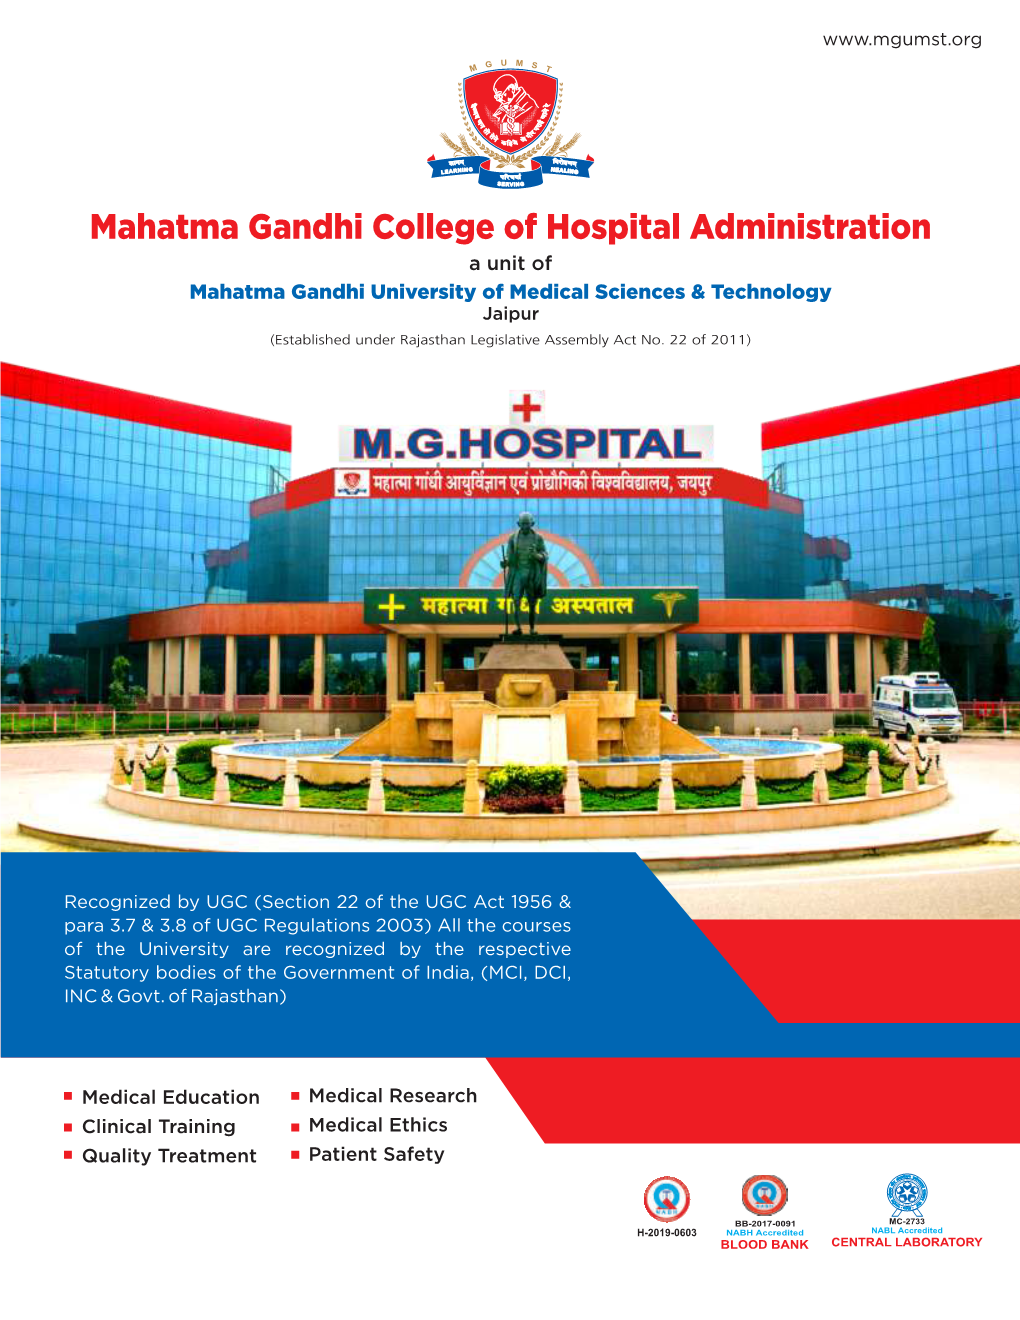 Mahatma Gandhi College of Hospital Administration